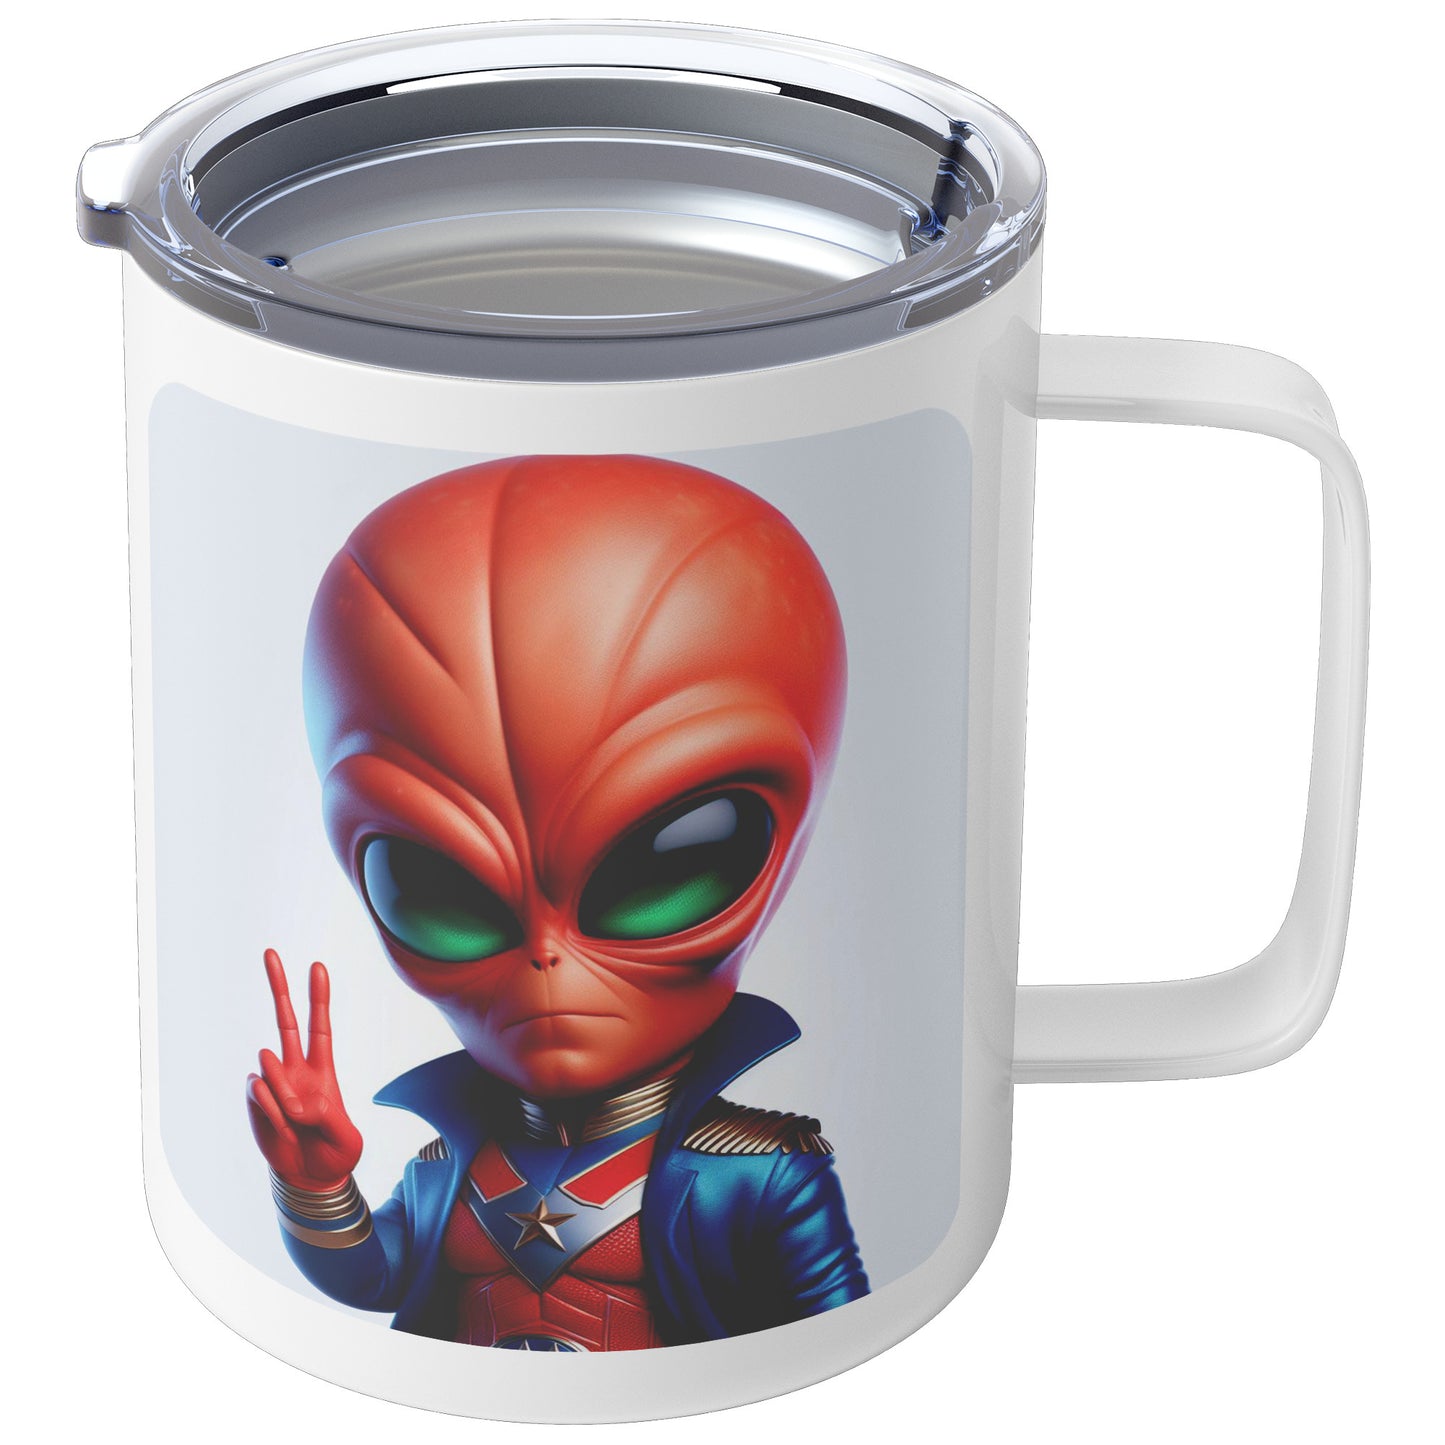 Martian Alien Caricature - Coffee Mug #3